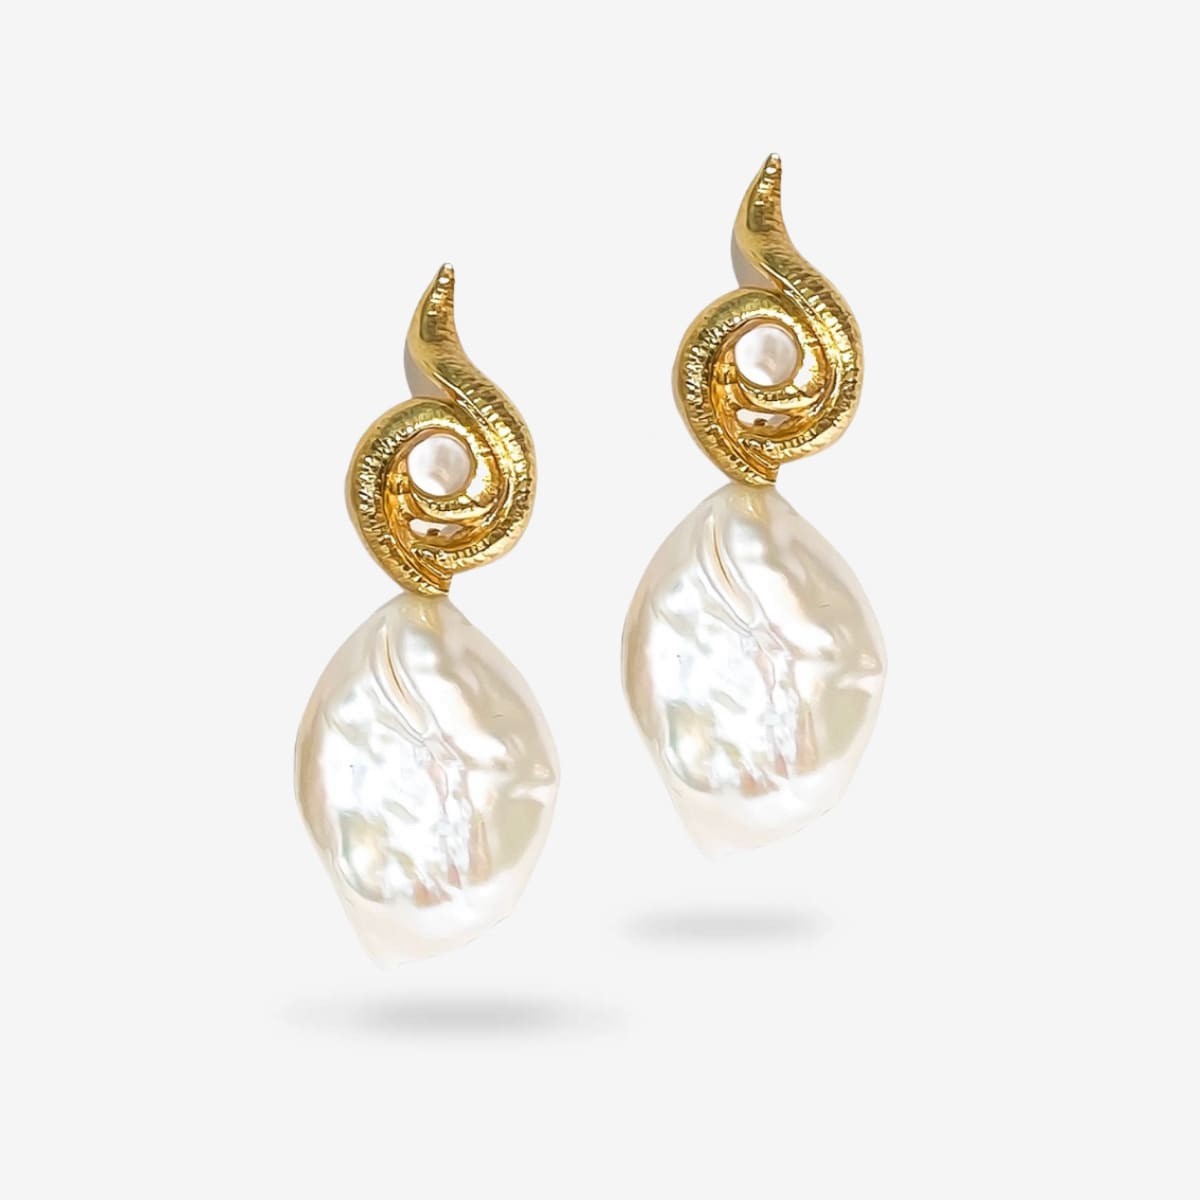 Surrea Goldplated Baroque Earrings - Ohrhänger - 22k vergoldet